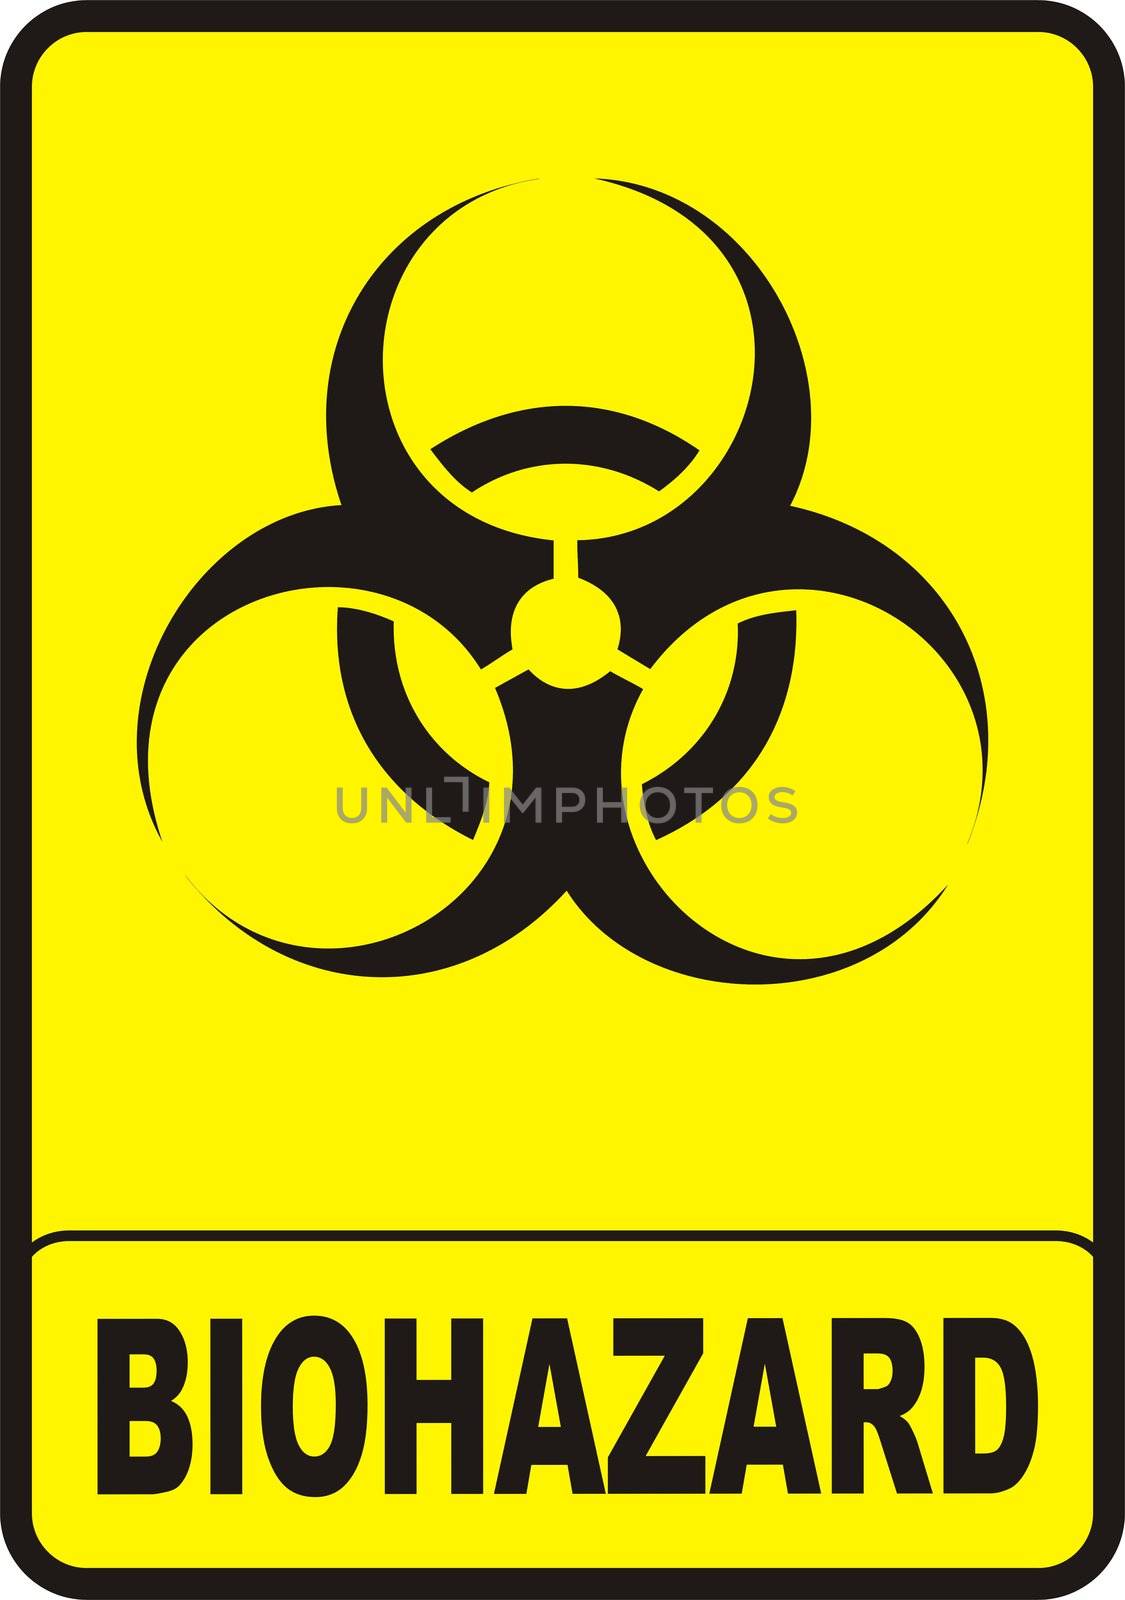 Biohazard Sign by tony4urban